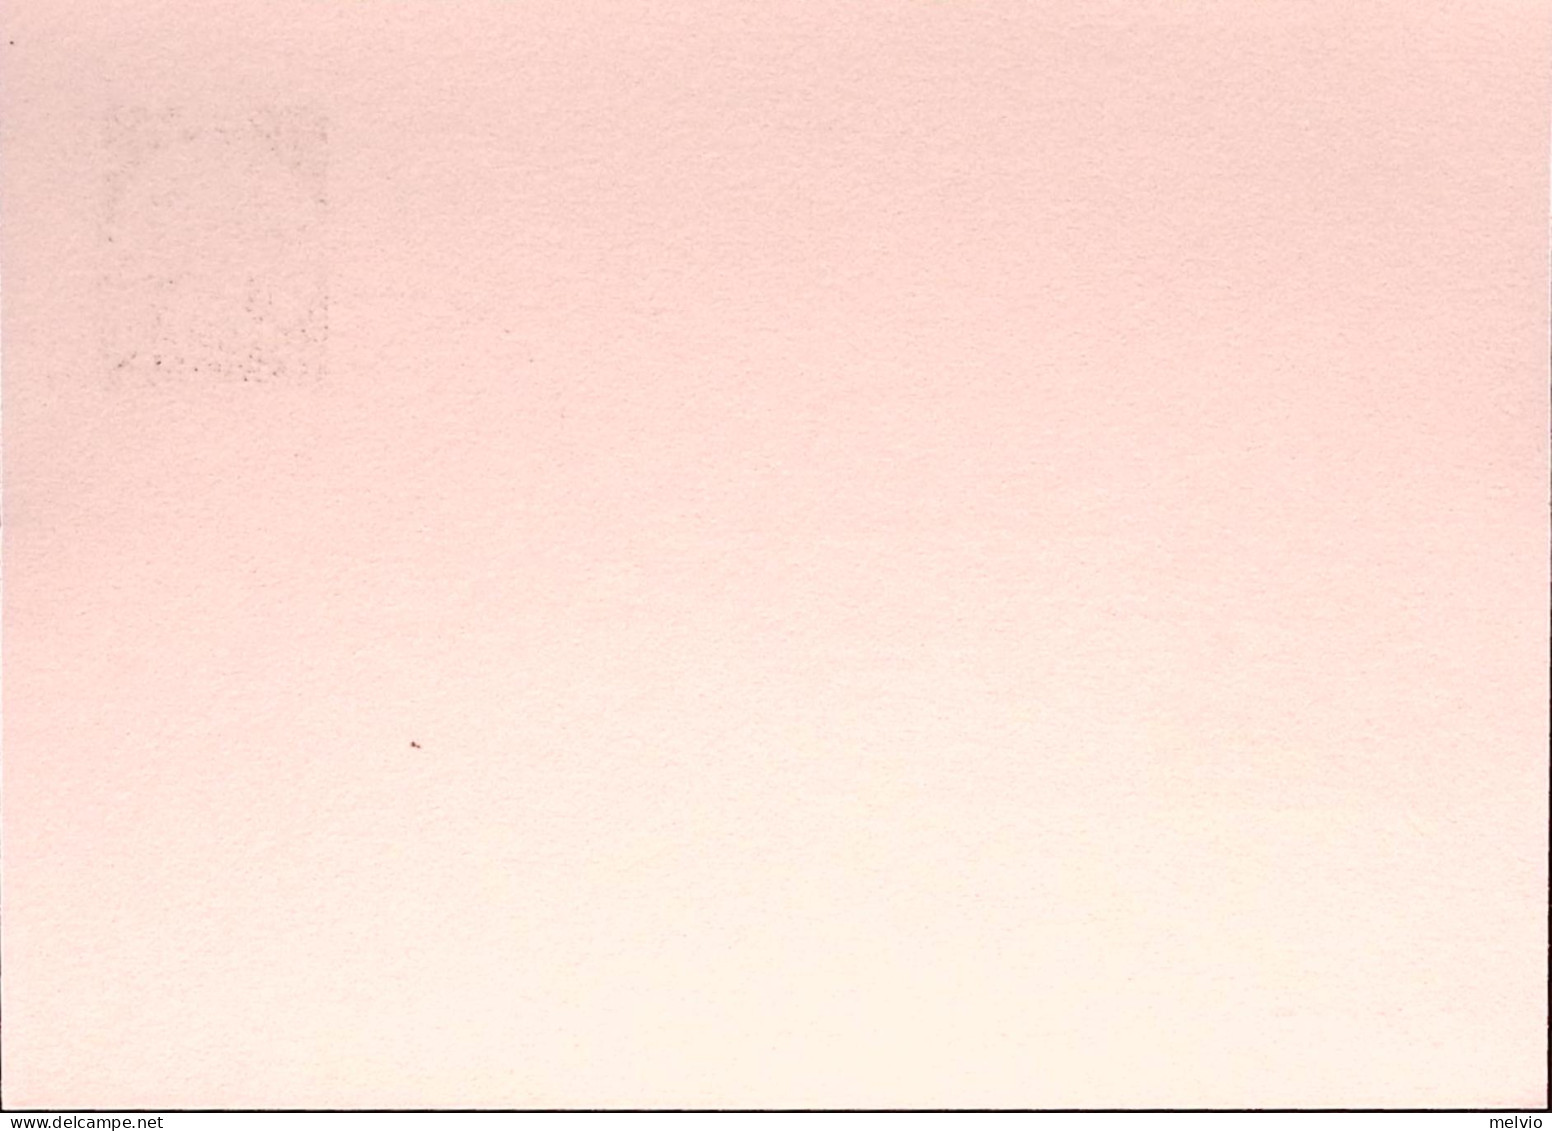 1997-BARI-FIERA LEVANTE Cartolina Postale IPZS Lire 750 Ann Spec - Stamped Stationery